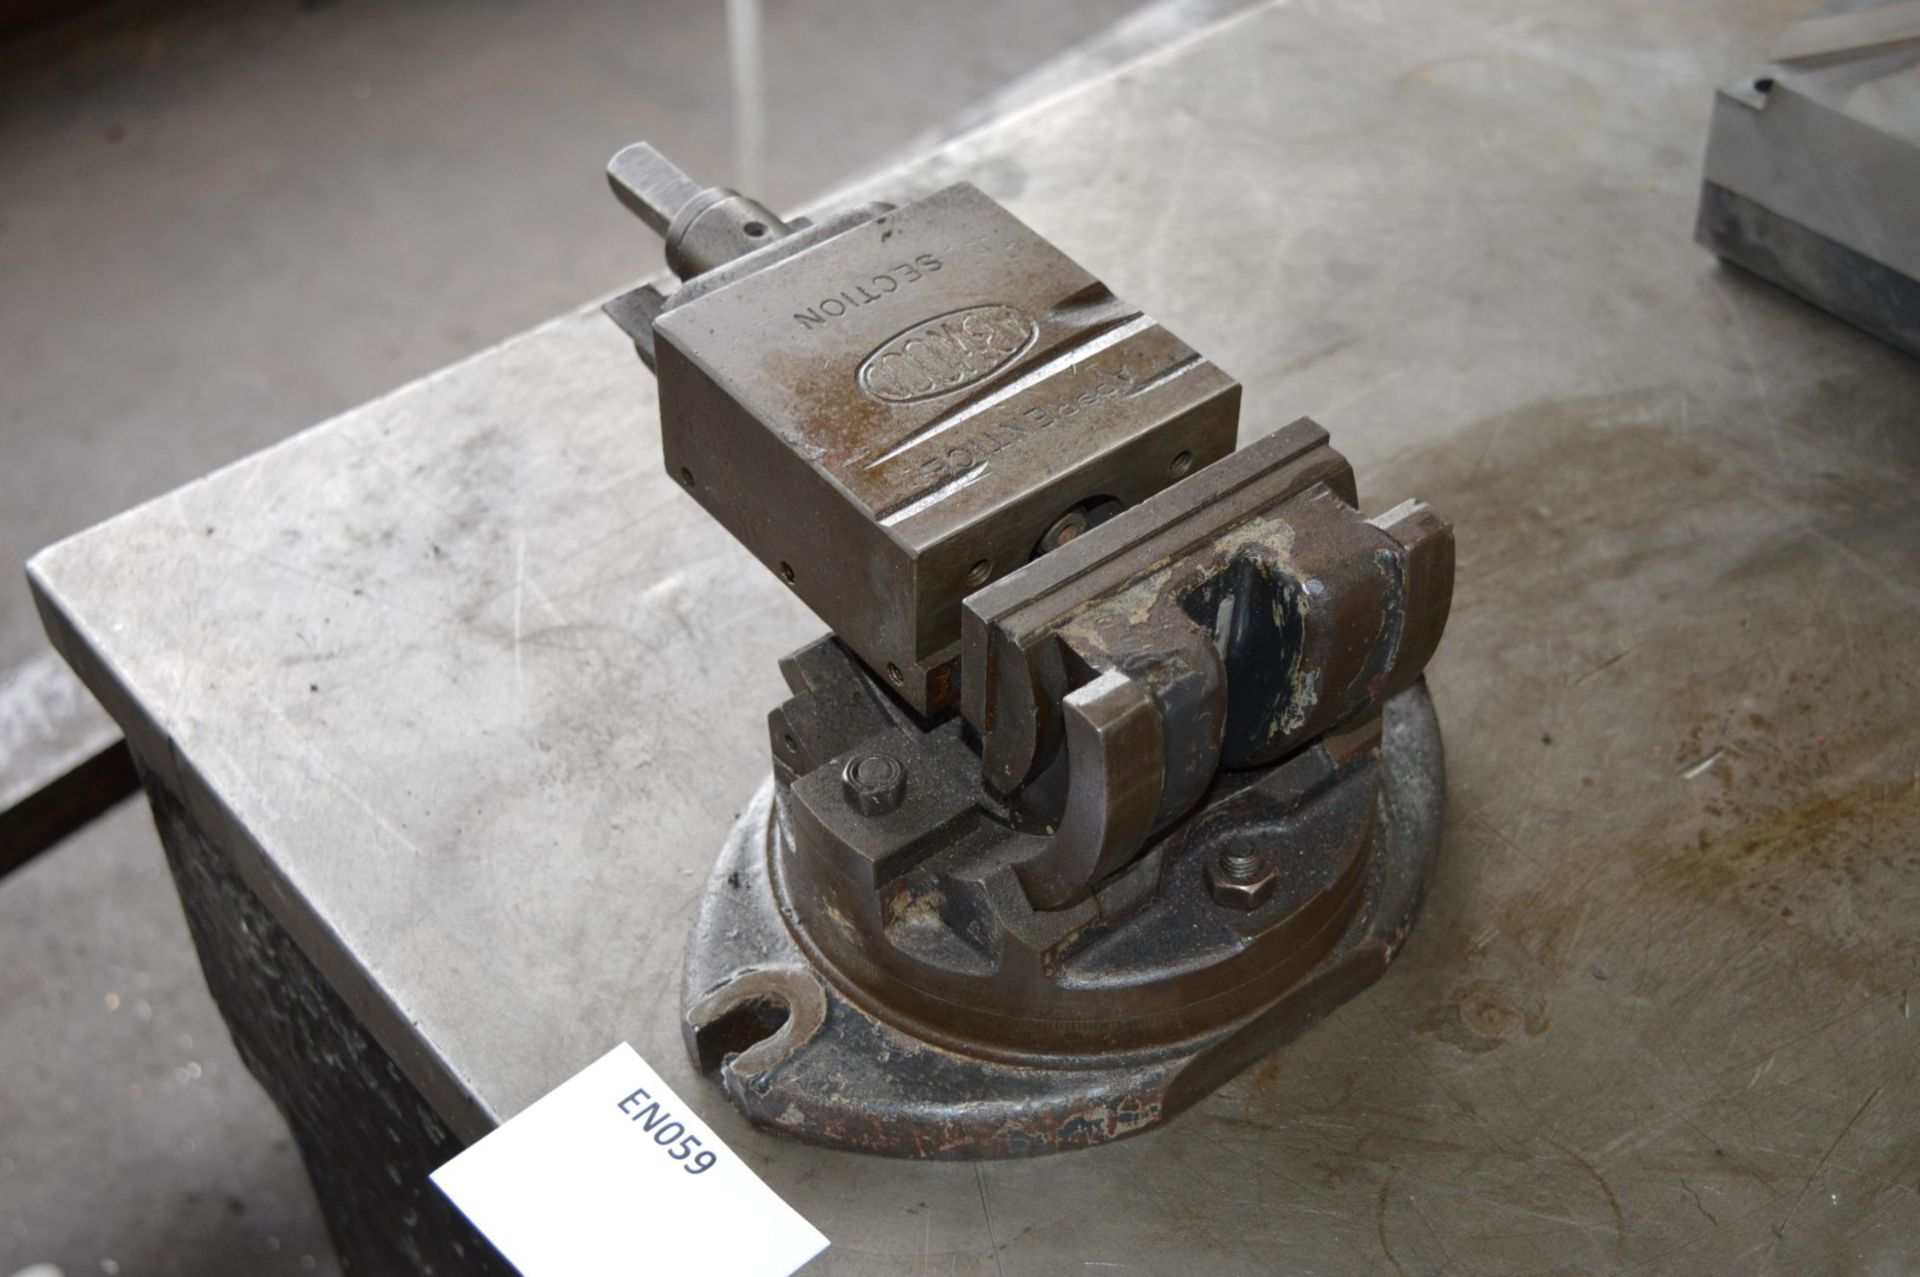 1 x Abwood Heavy Duty Tilting & Swiveling Machine Vice - CL202 - Ref EN059 - Location: Worcester - Image 5 of 6